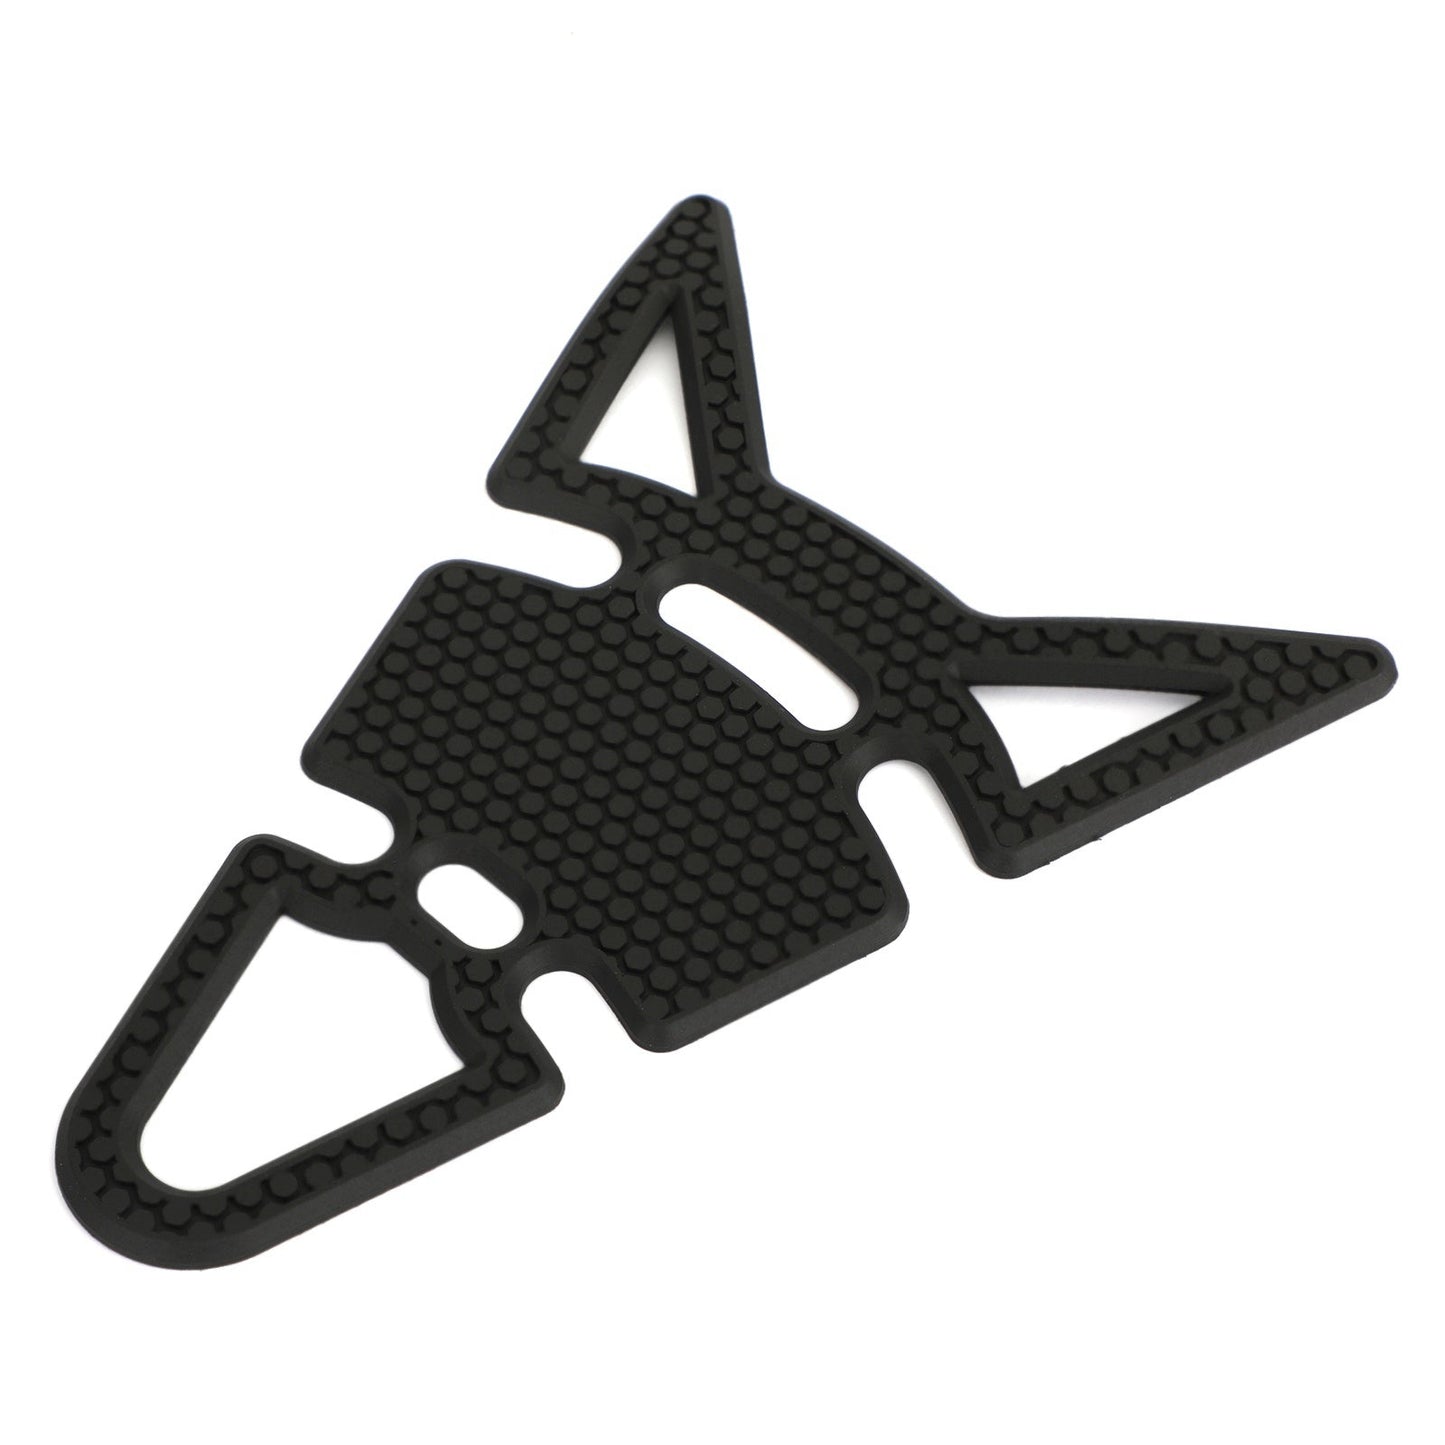 3D Black "Cat Ears" Rubber Gel Tank Pad Protector Sticker Motorcycle Motorbike